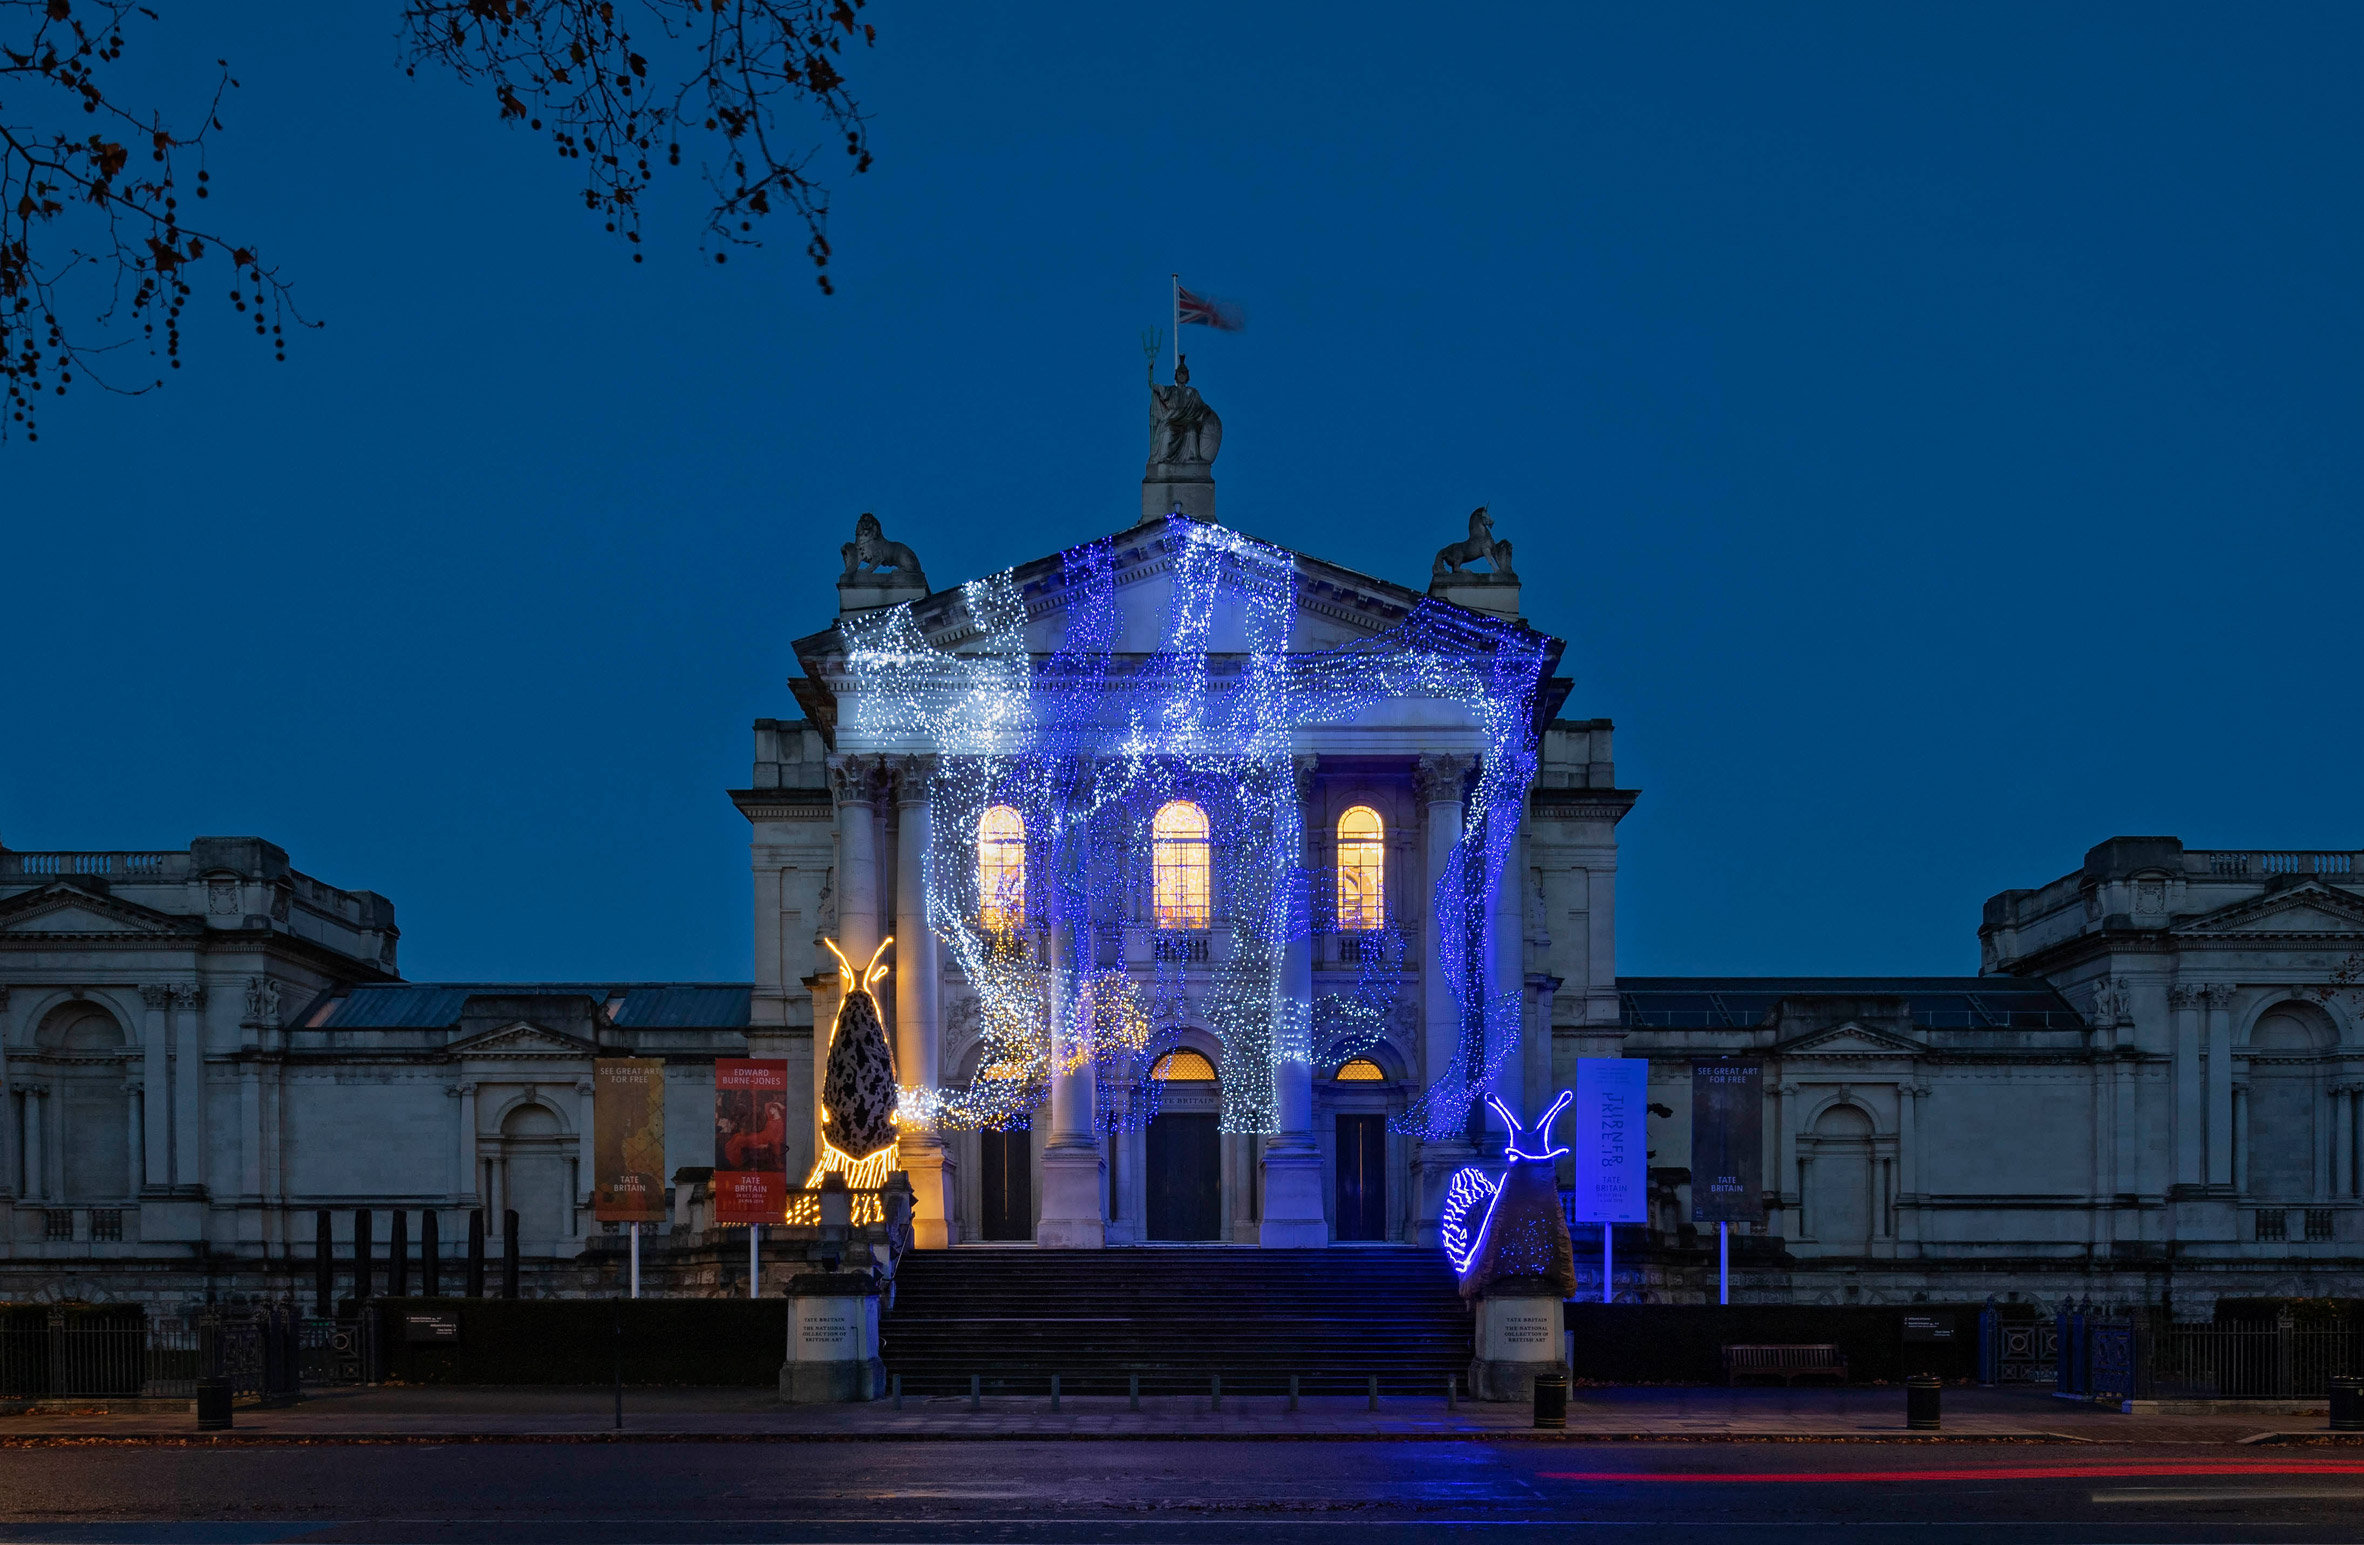 Monster Chetwynd illuminates Tate Britain with giant glowing slugs